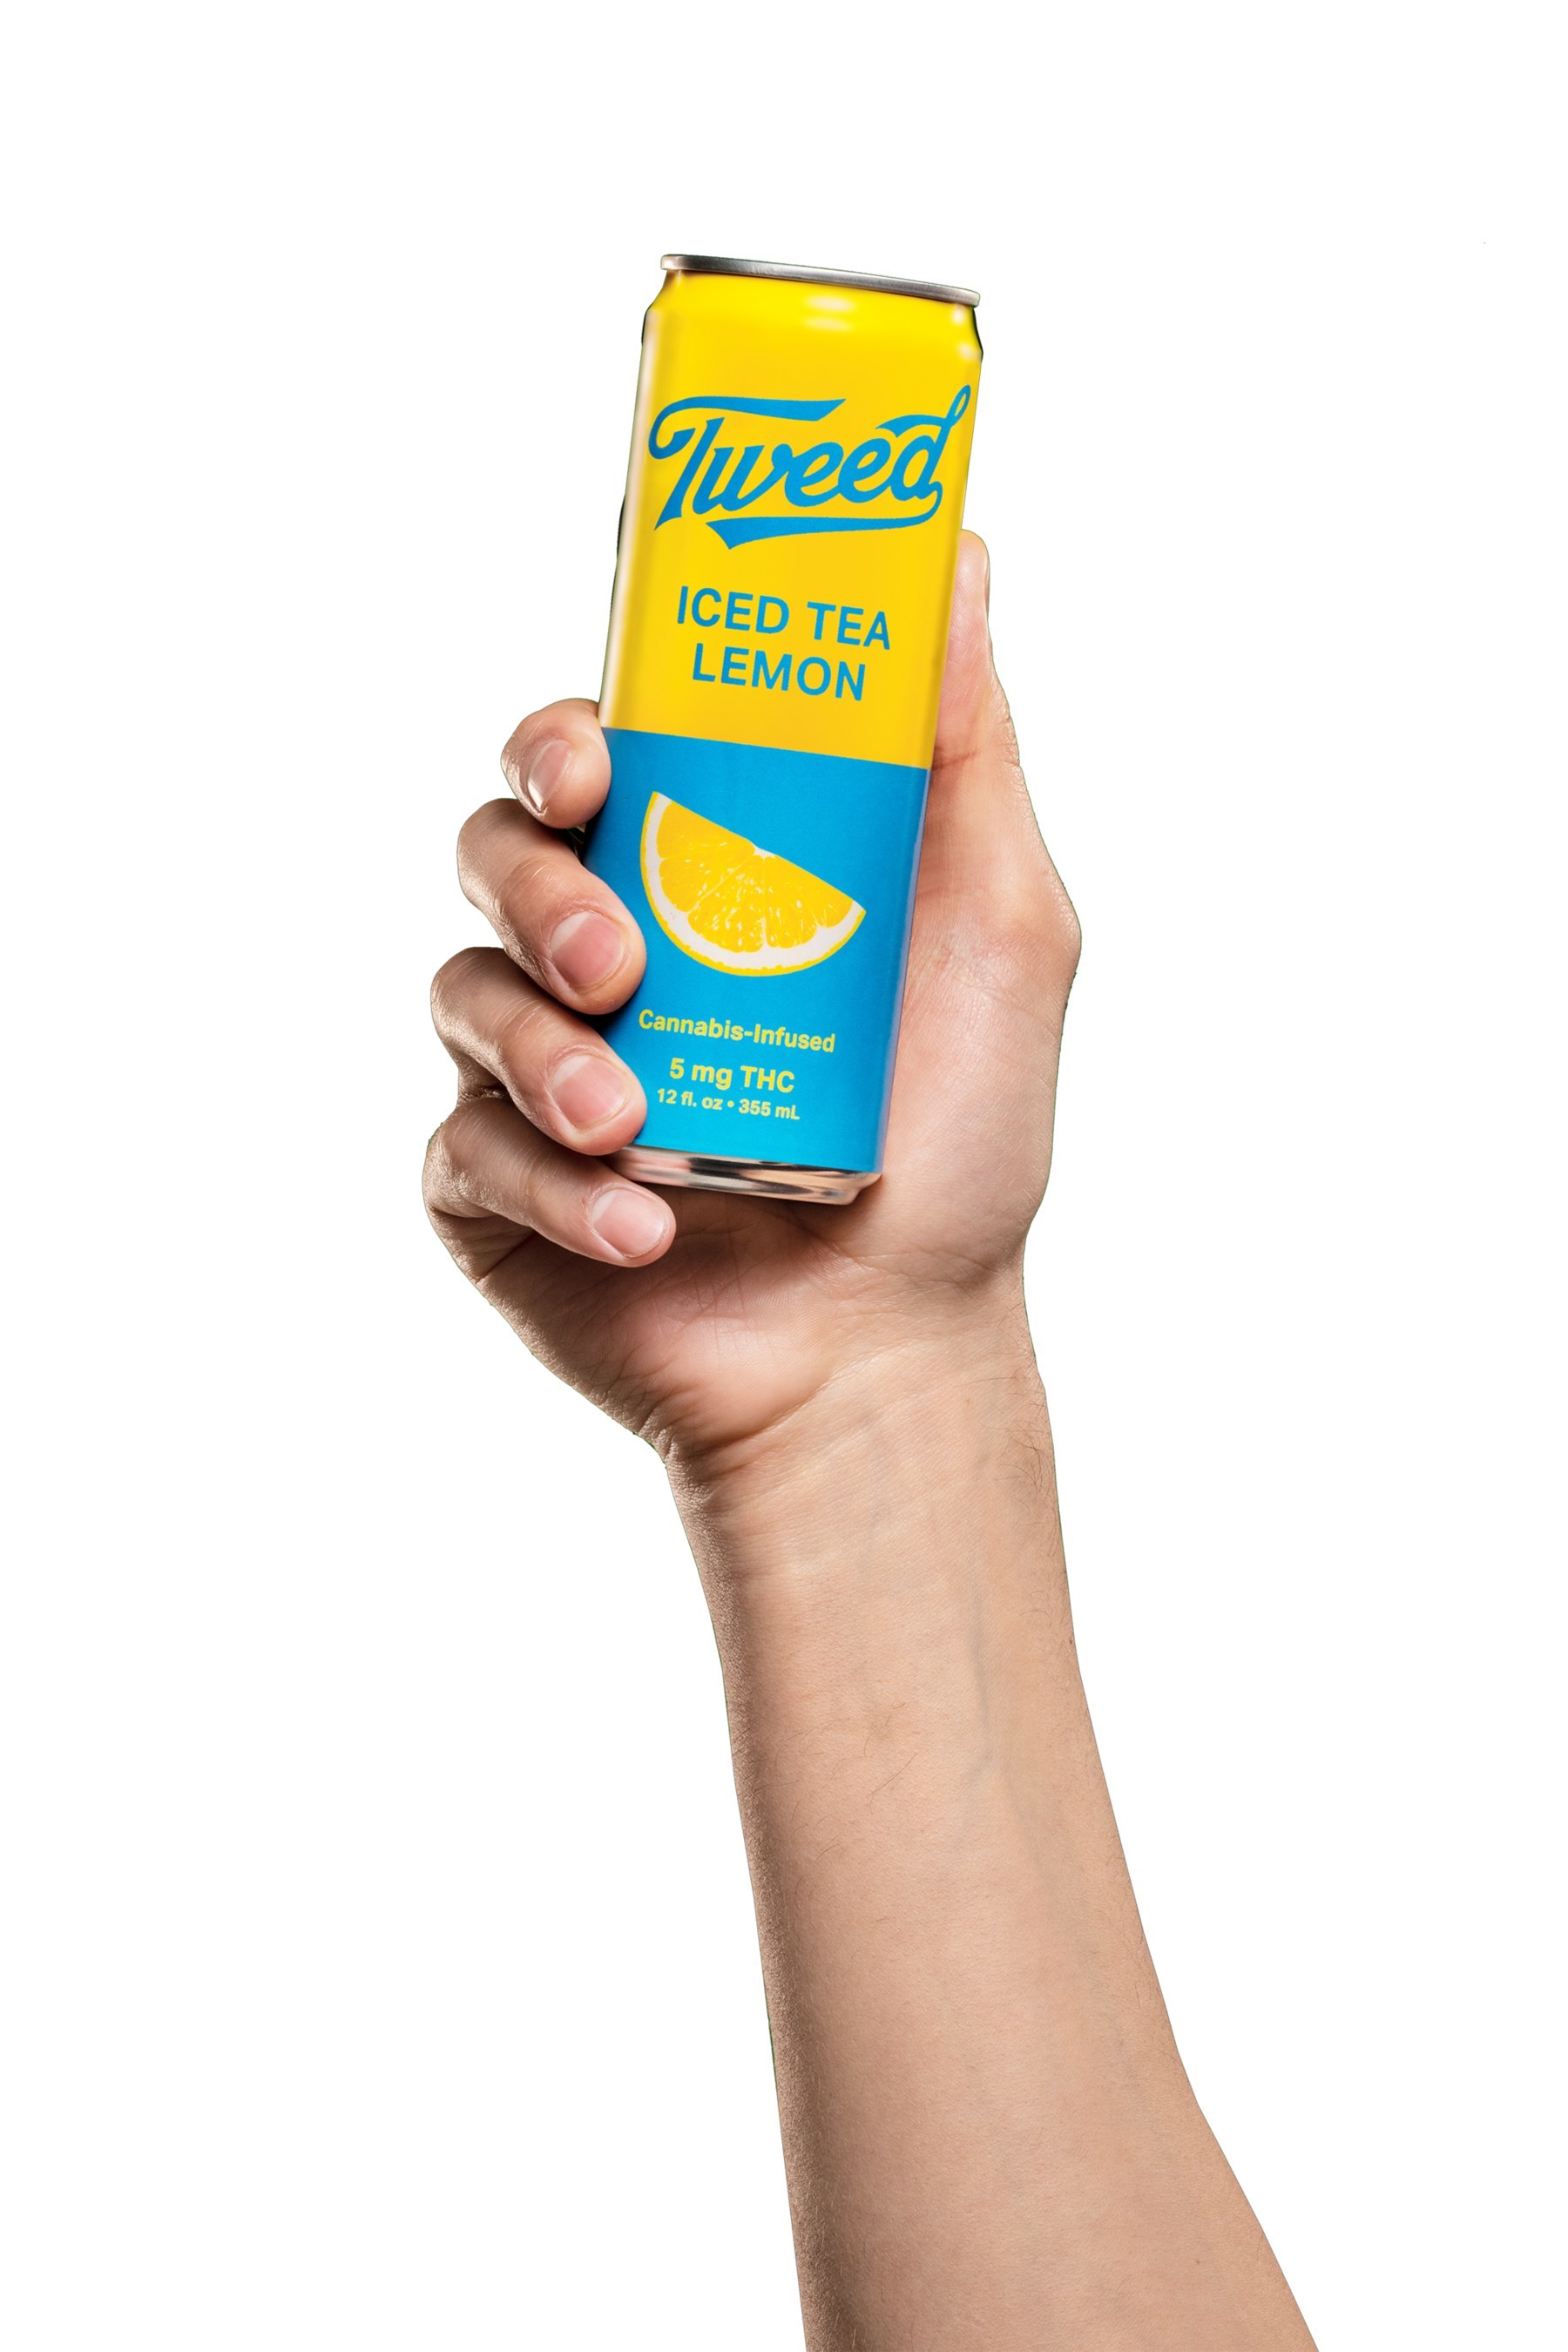 Tweed Iced Tea Lemon (CNW Group/Canopy Growth Corporation)